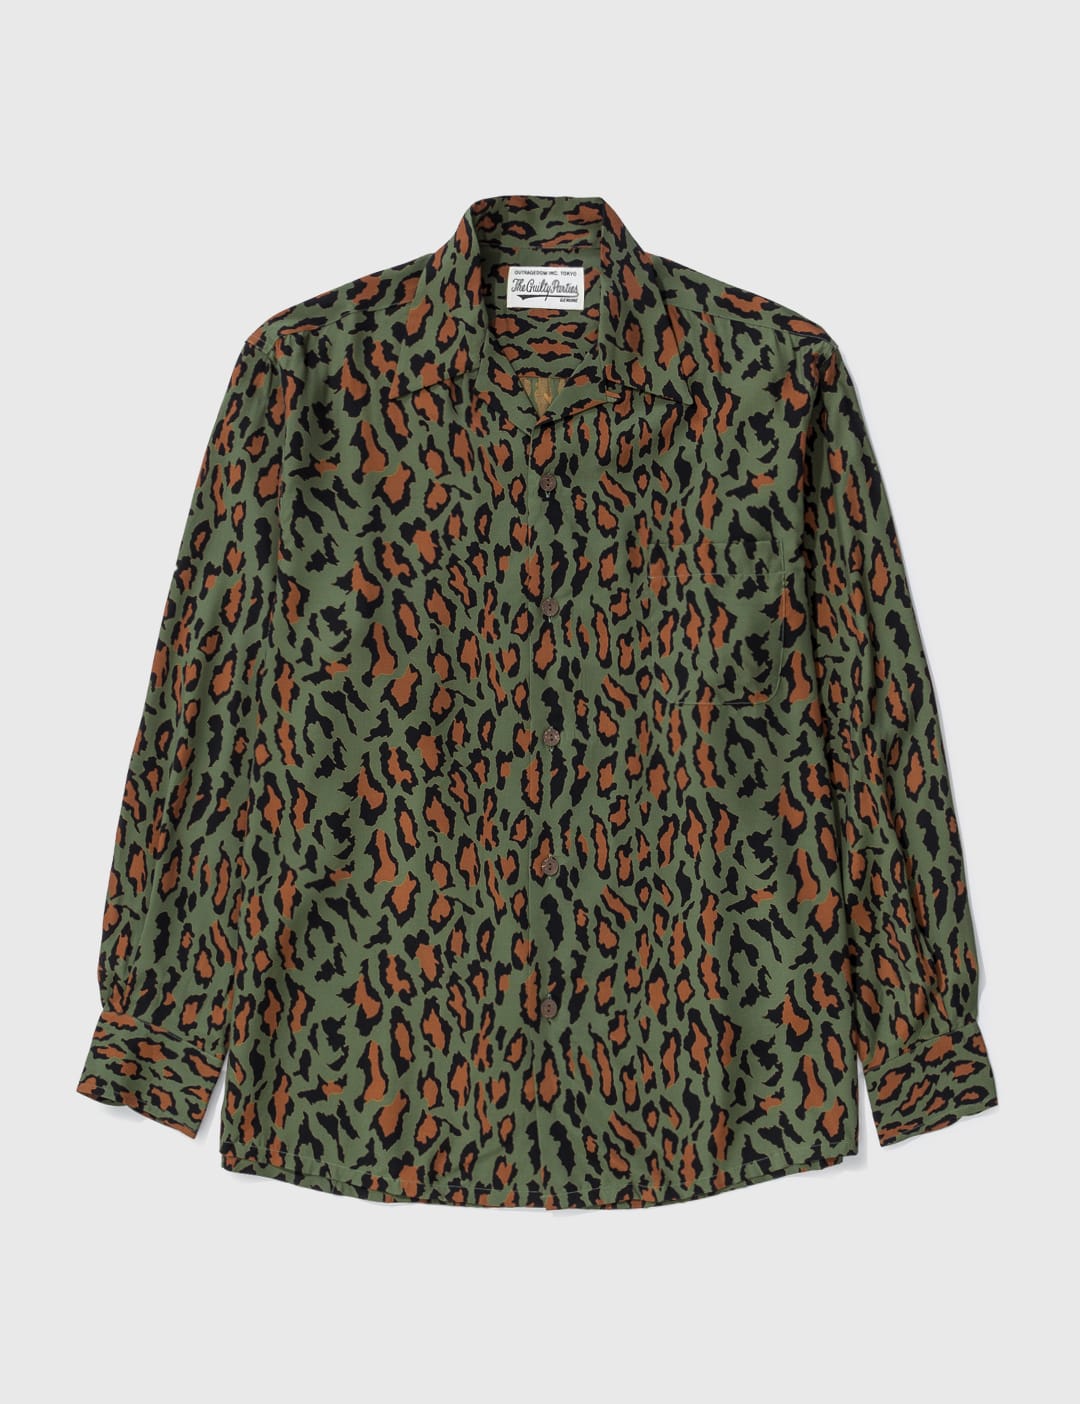 Wacko Maria - Leopard Open Collar Shirt | HBX - Globally Curated 